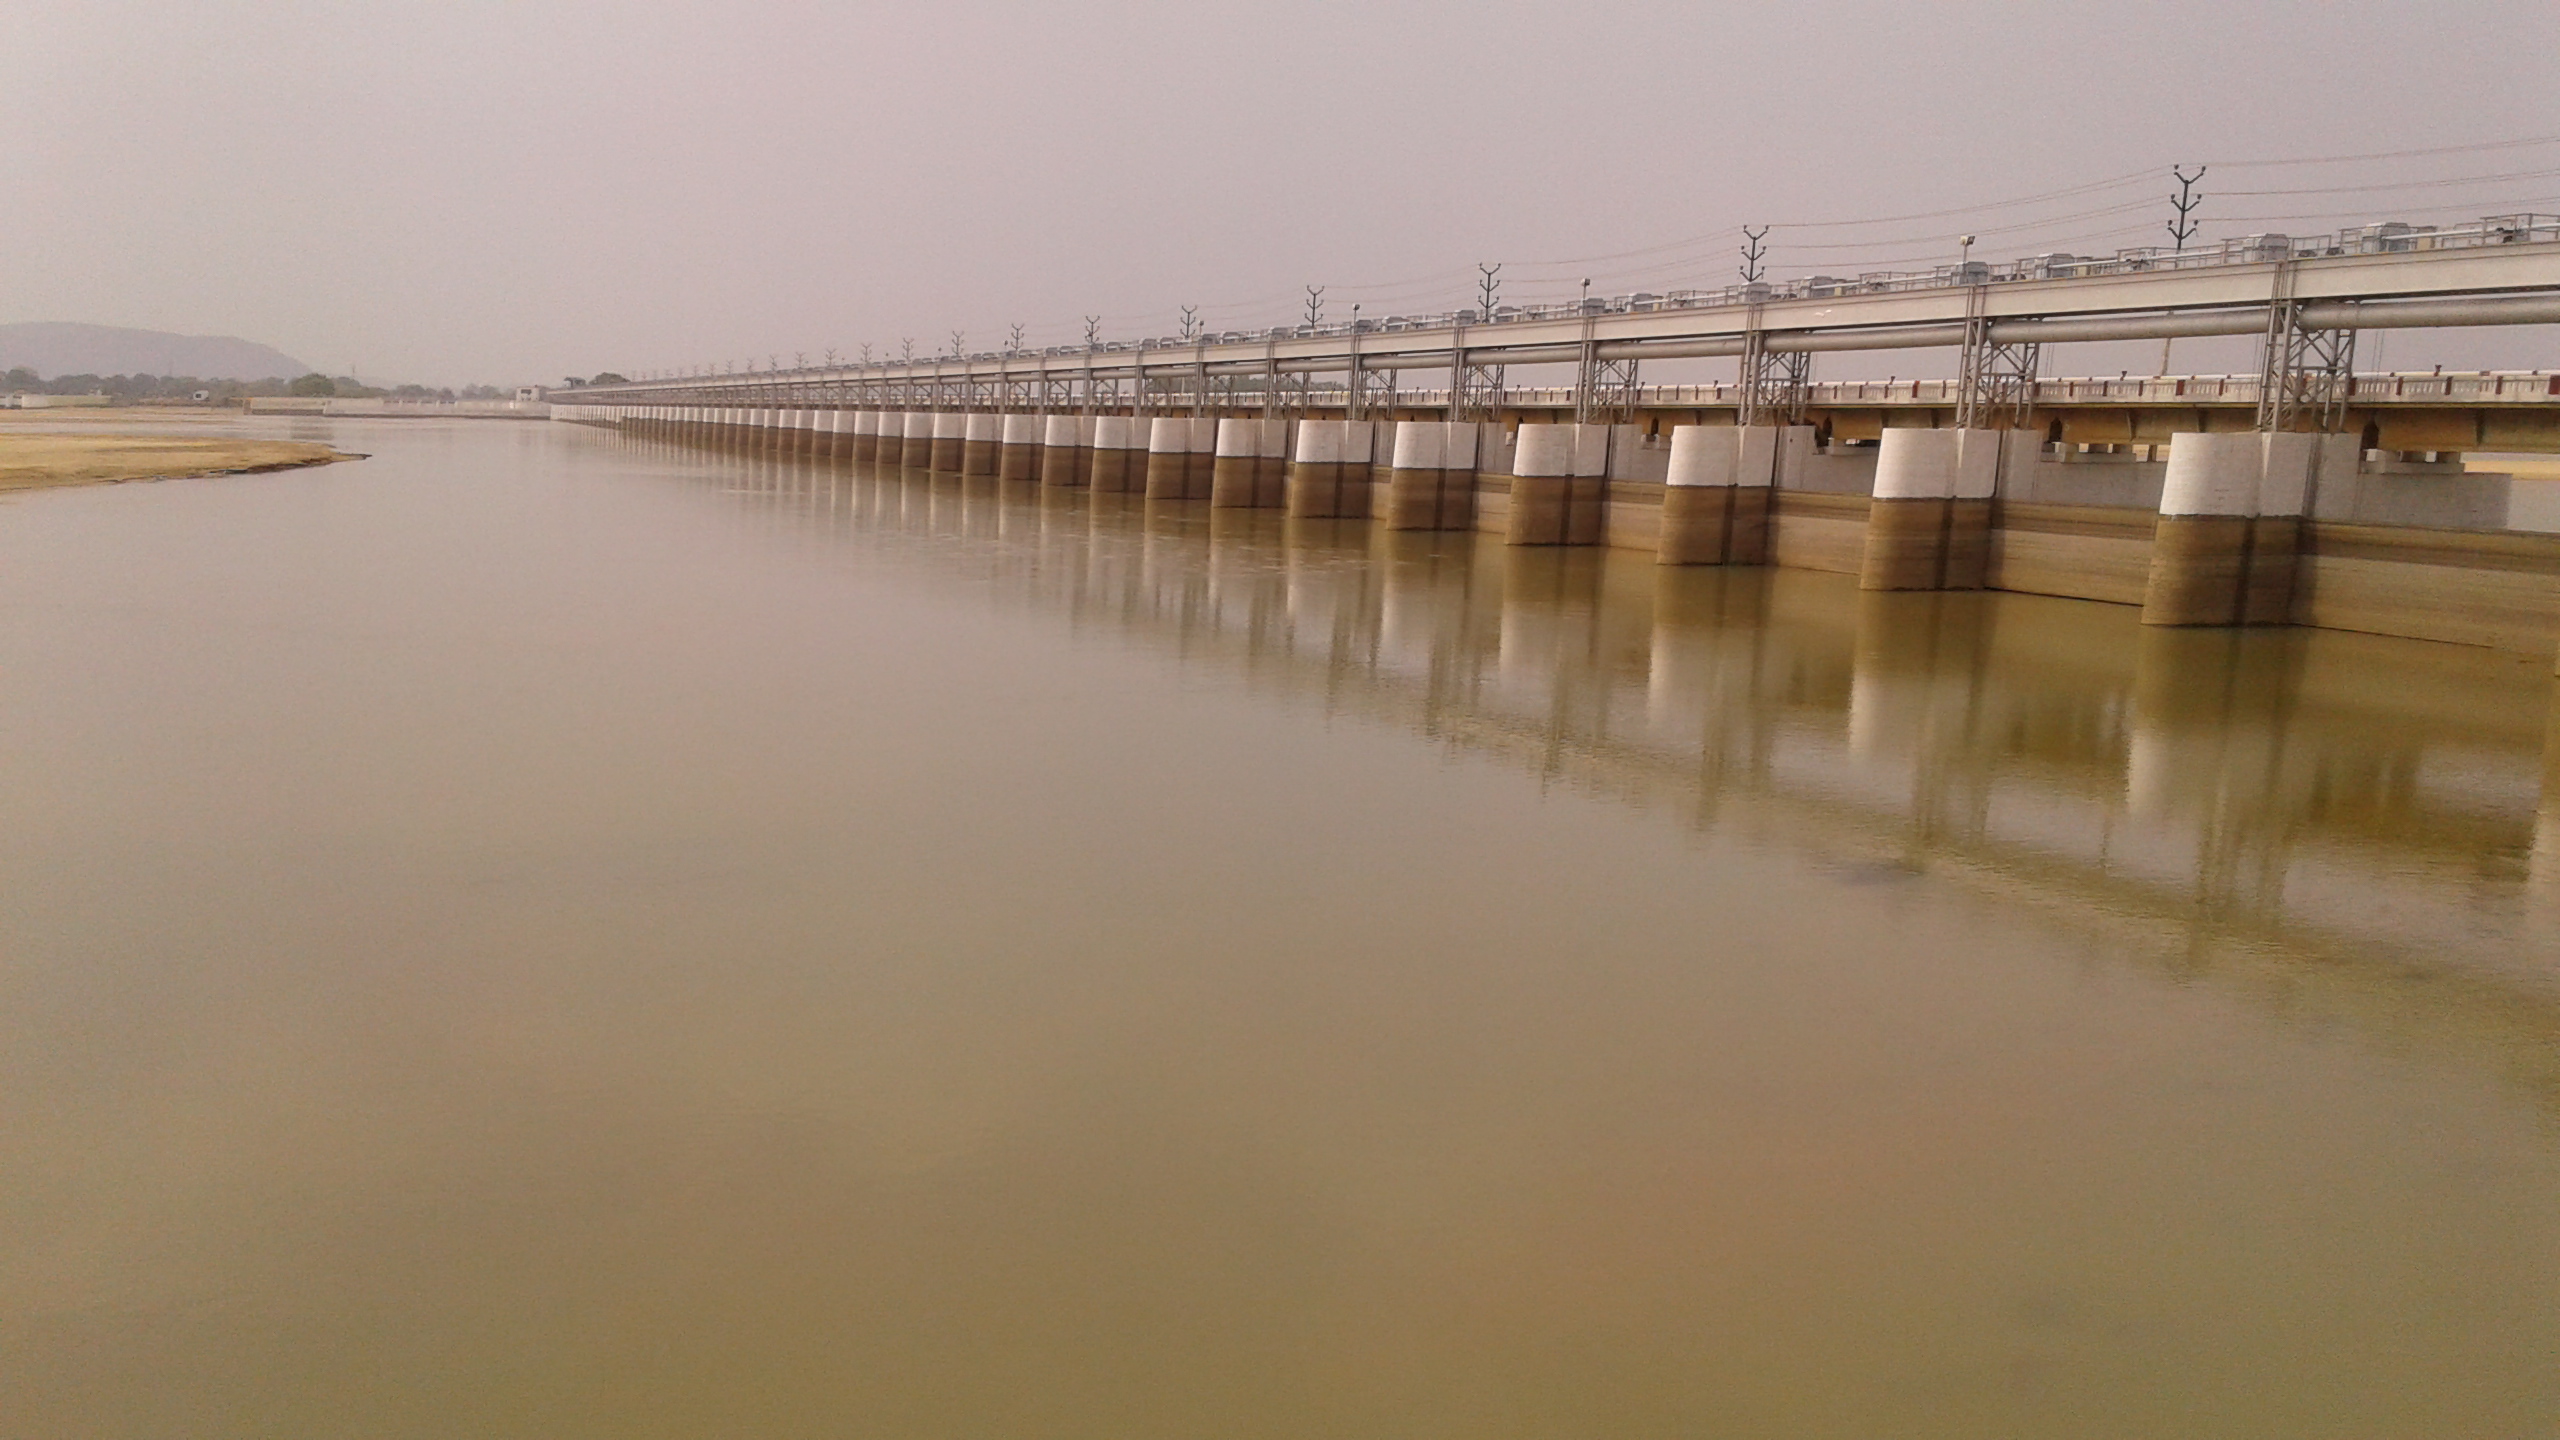 Indrapuri Dam